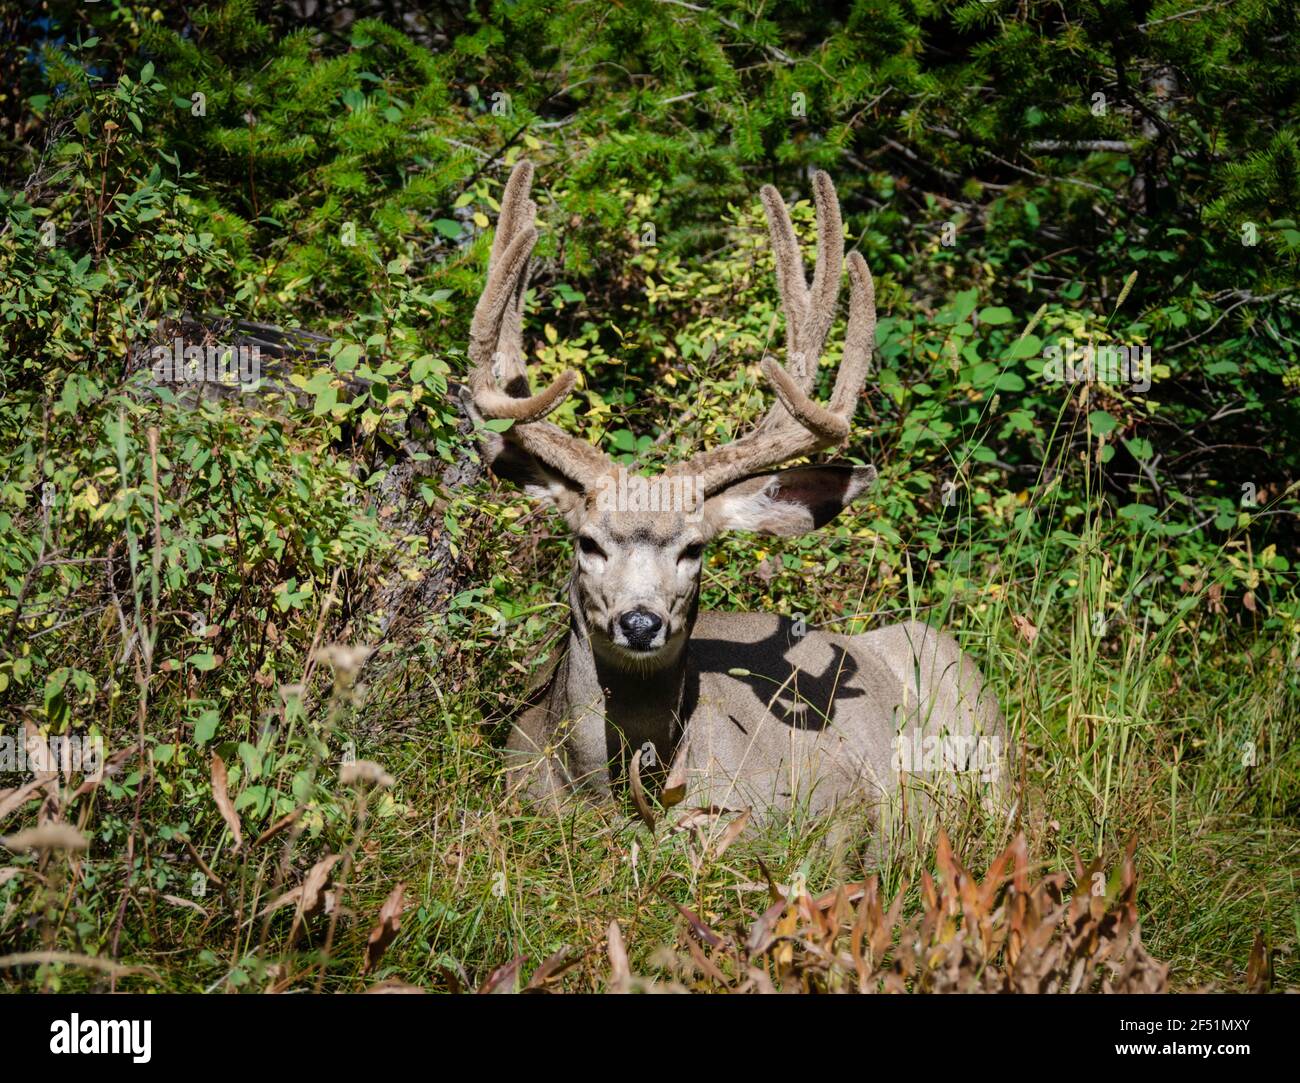 Trophy mule deer buck, 8 point in velvet. Wild majestic deer in natural outdoor setting. Large 8 point deer with antlers in velvet. Stock Photo